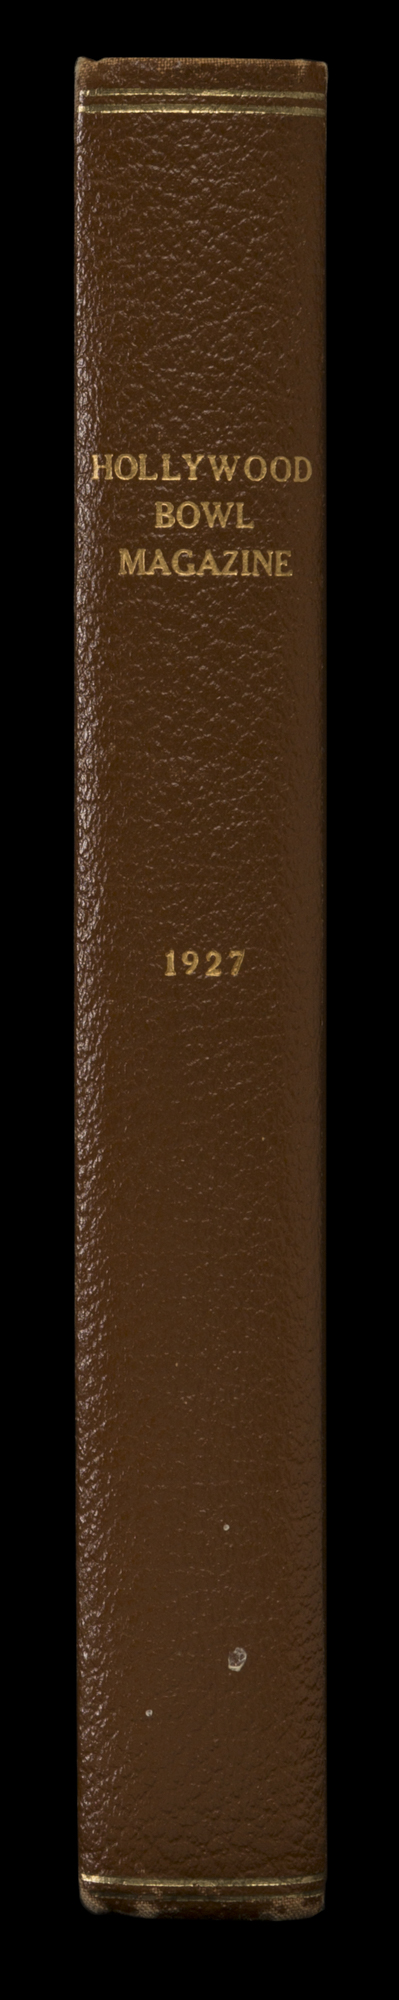 HB_ProgramBook_Spine_1927.jpg